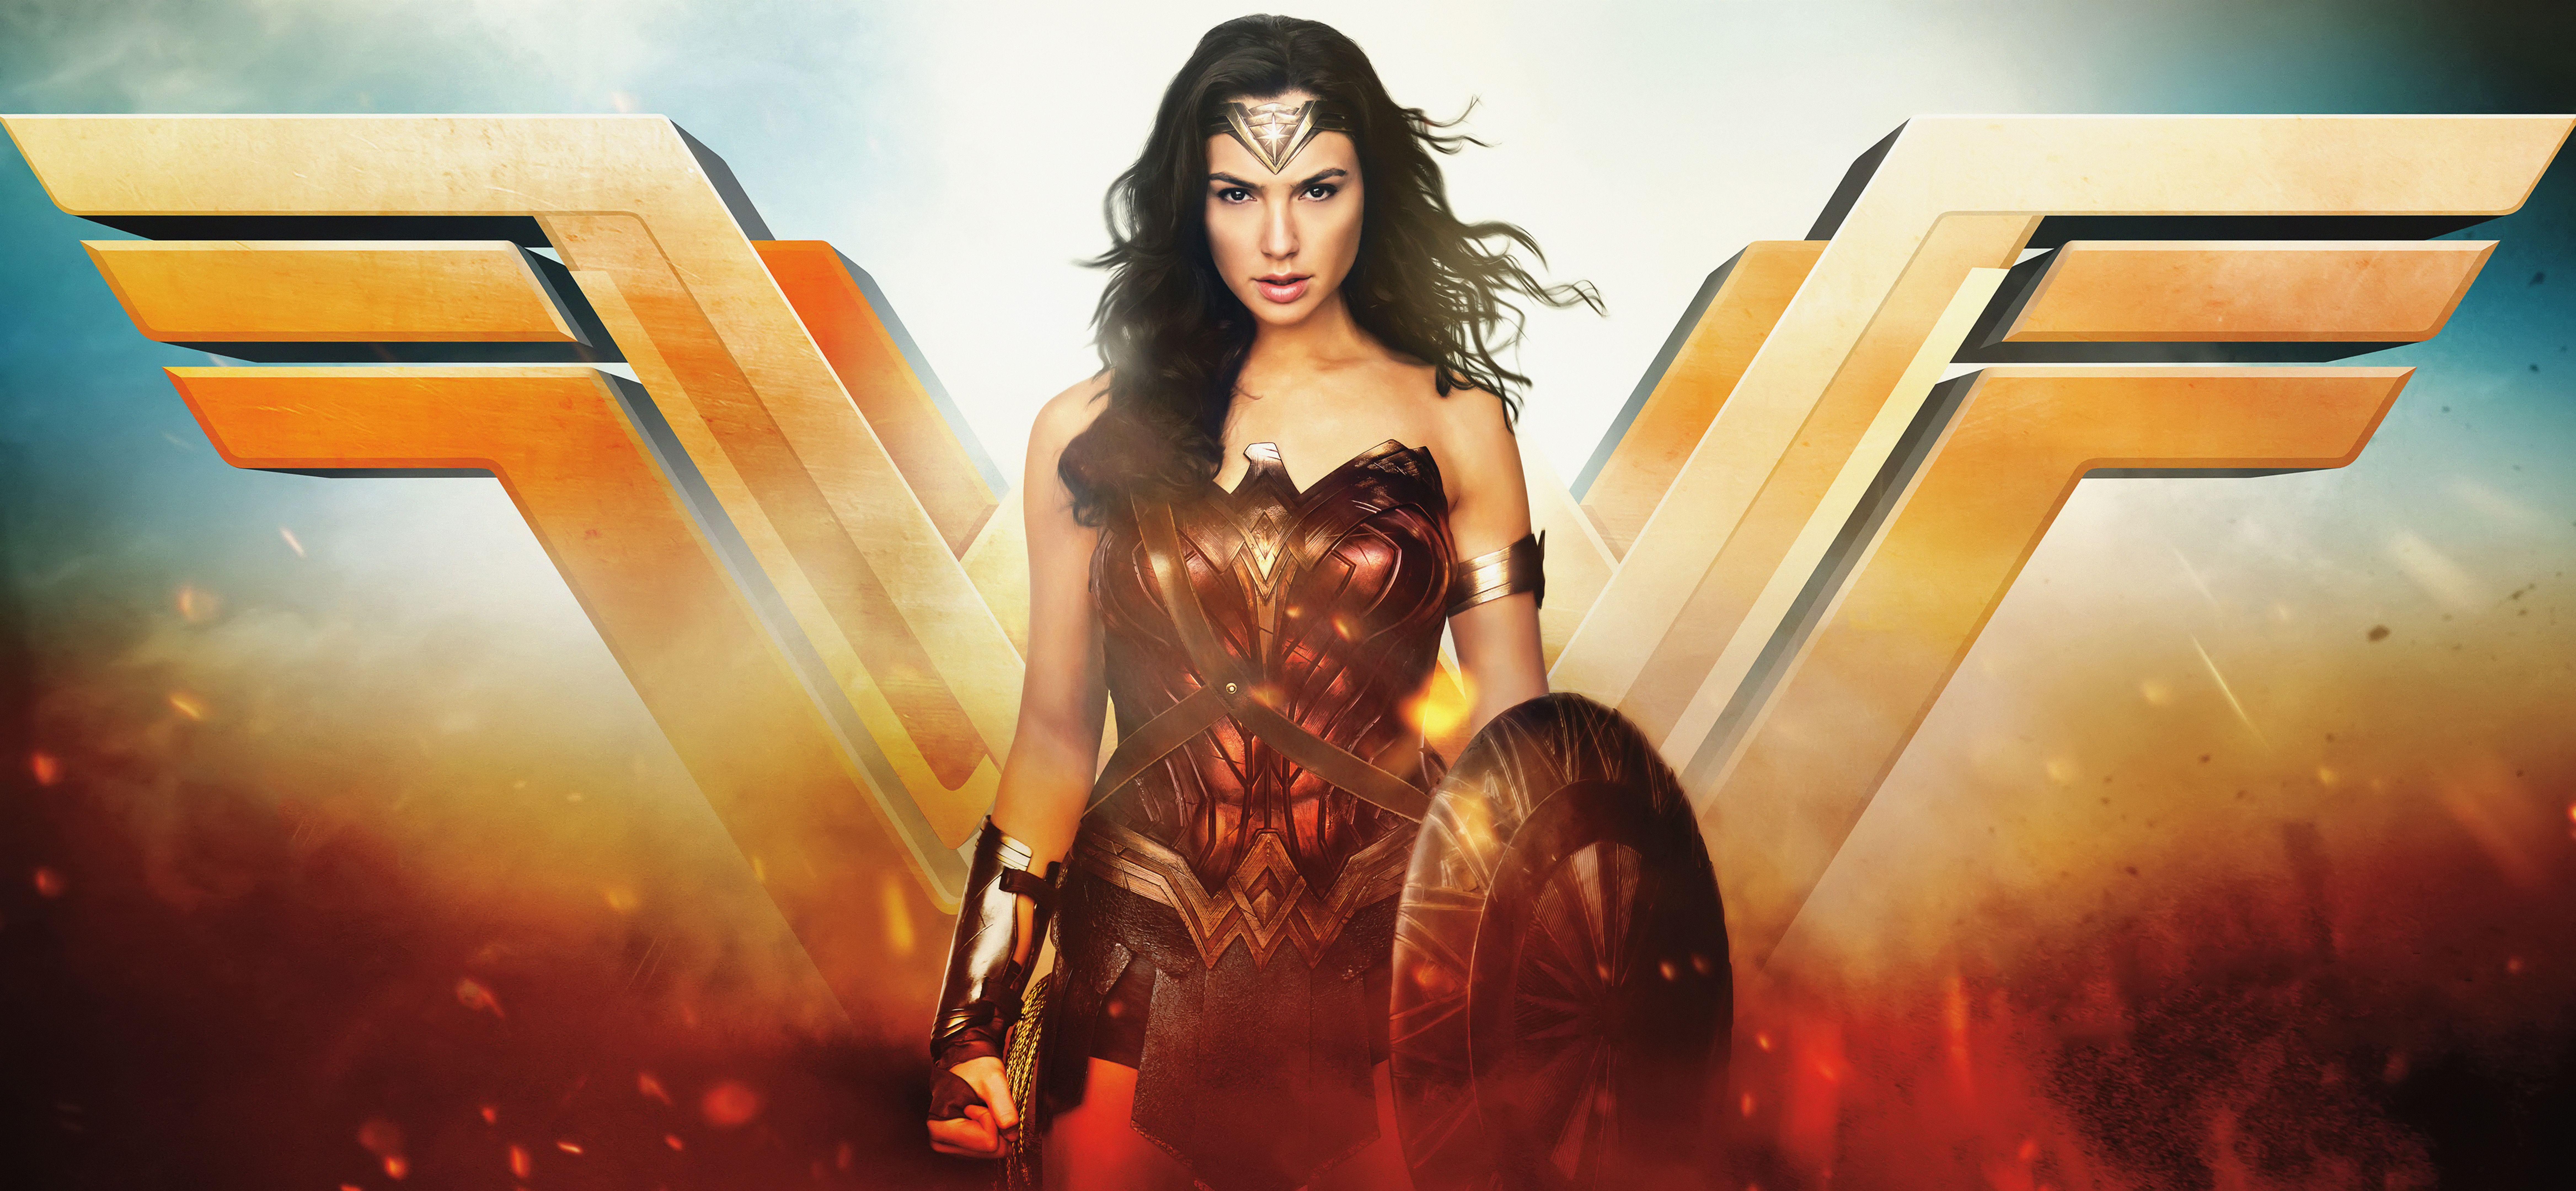 Wonder Woman Art Wallpaper Hd Movies 4k Wallpapers Images Photos And ...